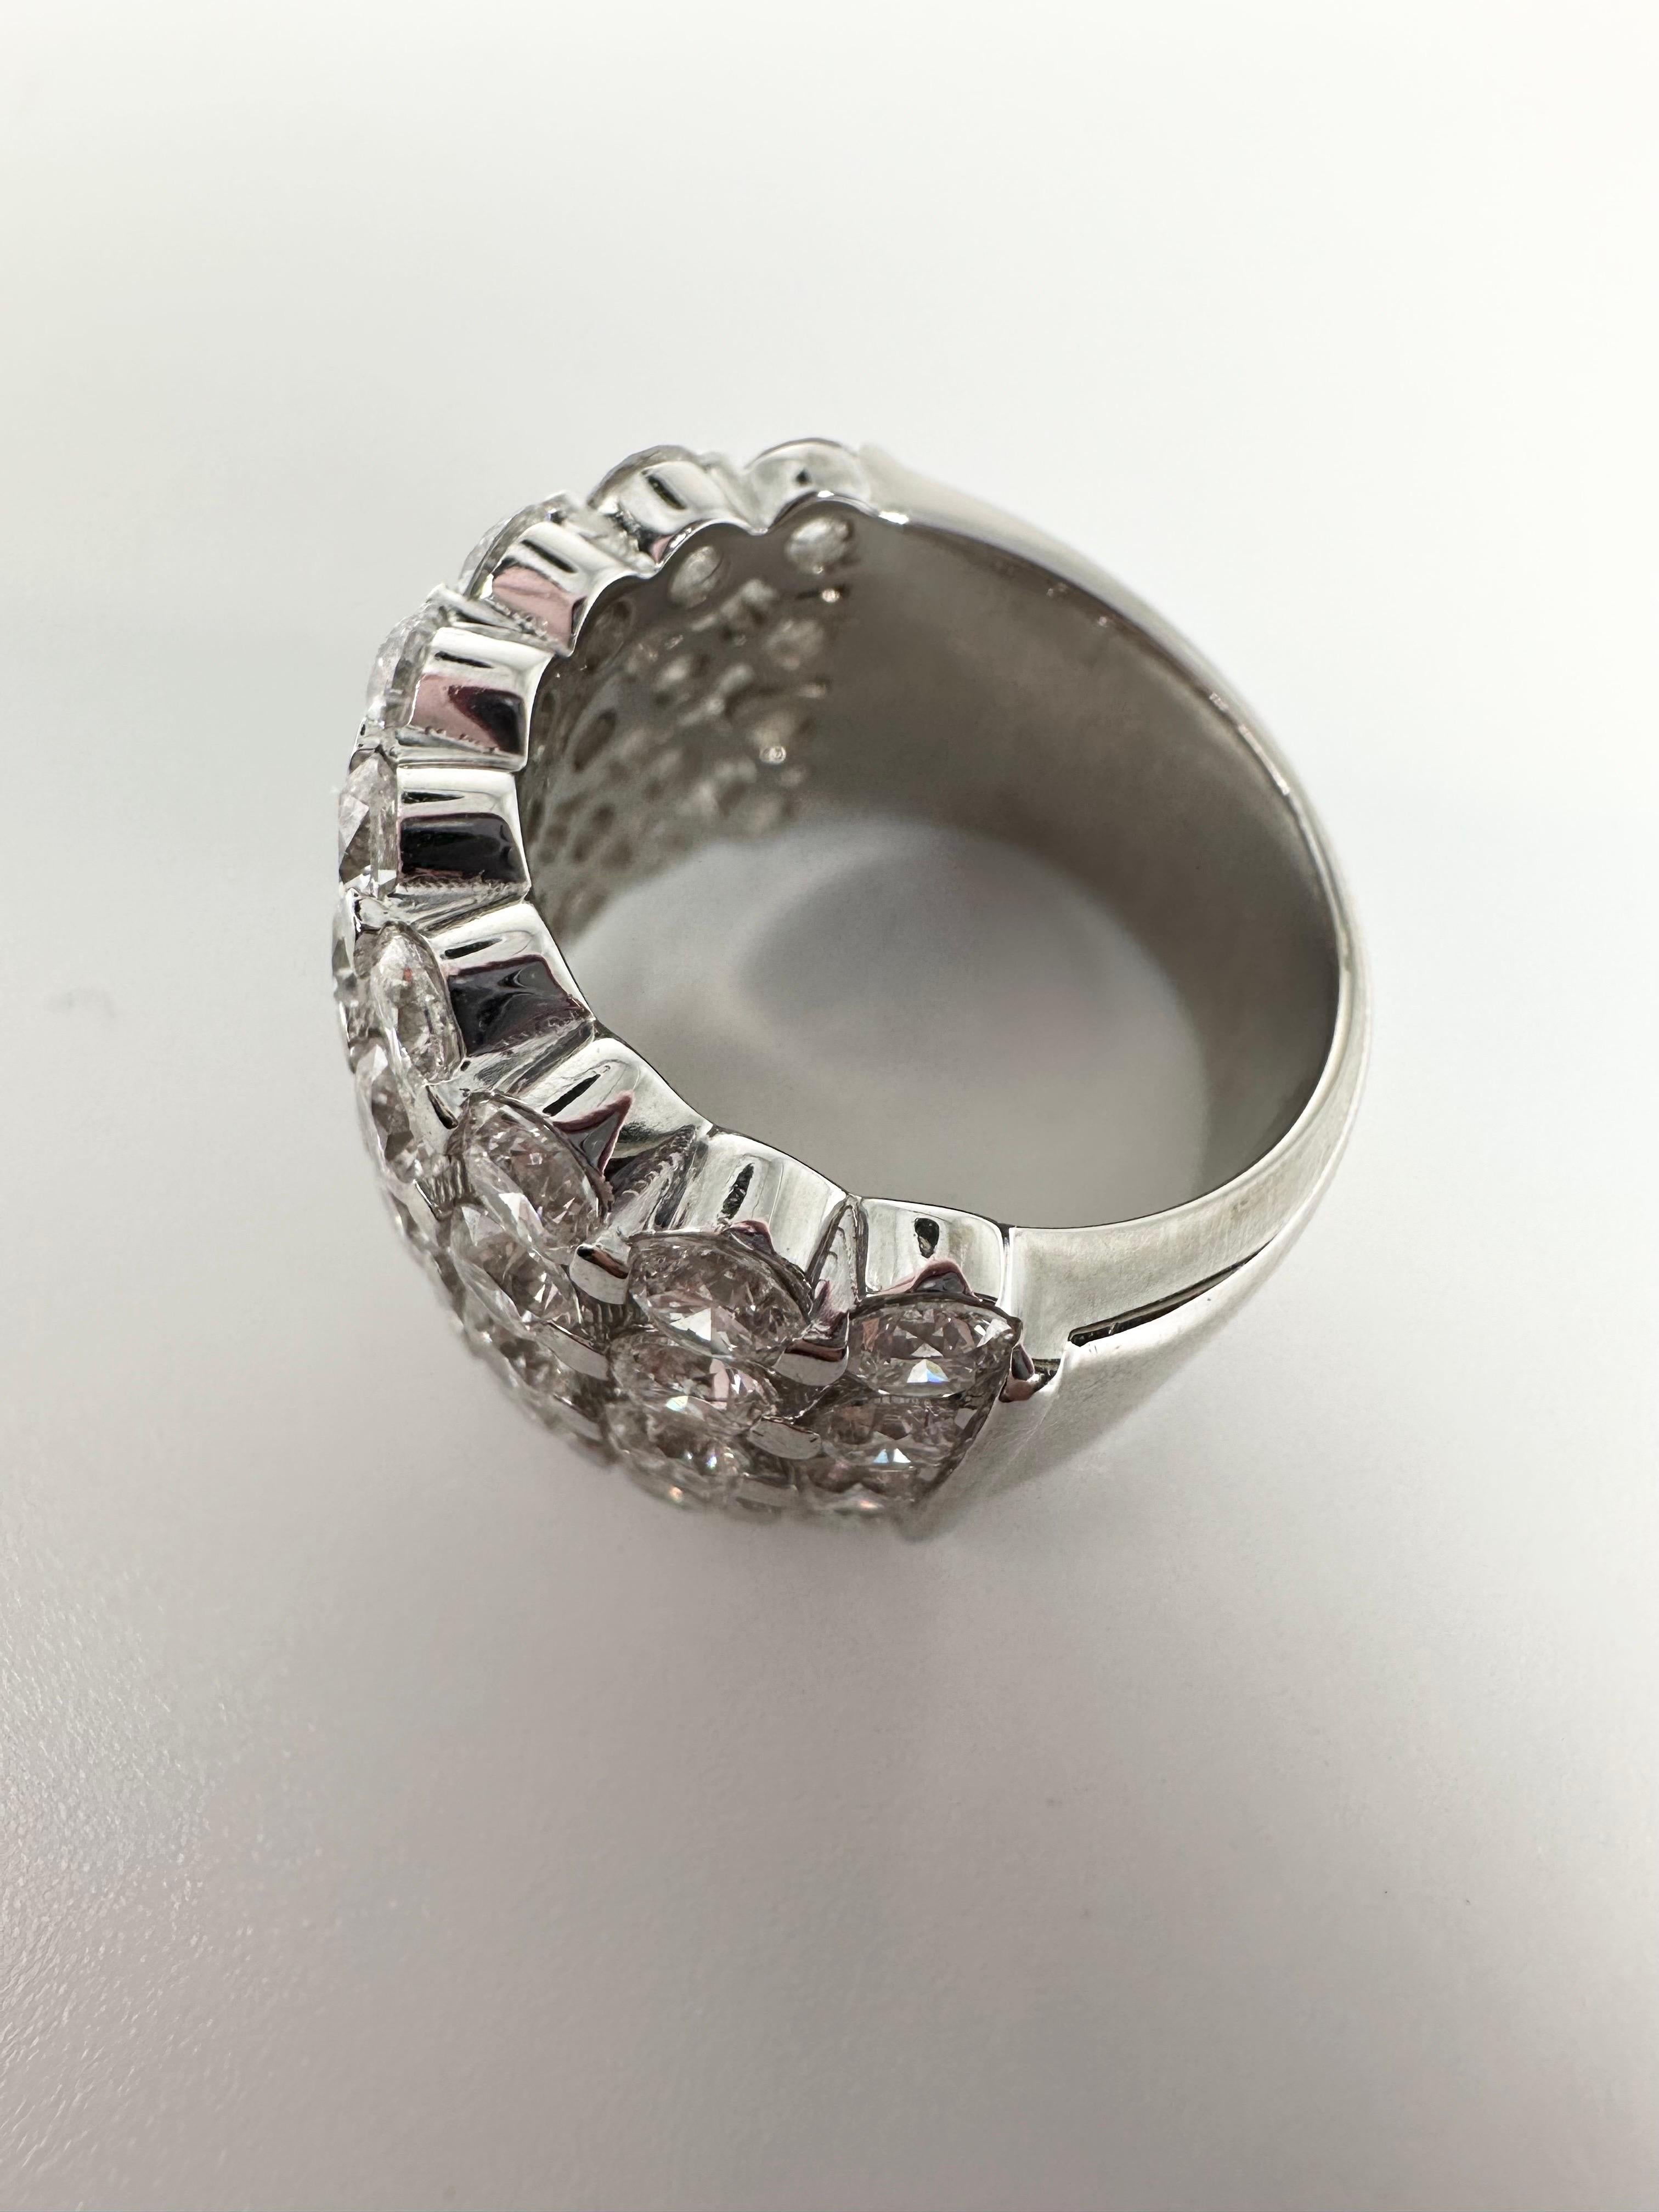 Huge cocktail ring 5ct 18kt whit gold wide diamond ring designer ring For Sale 2